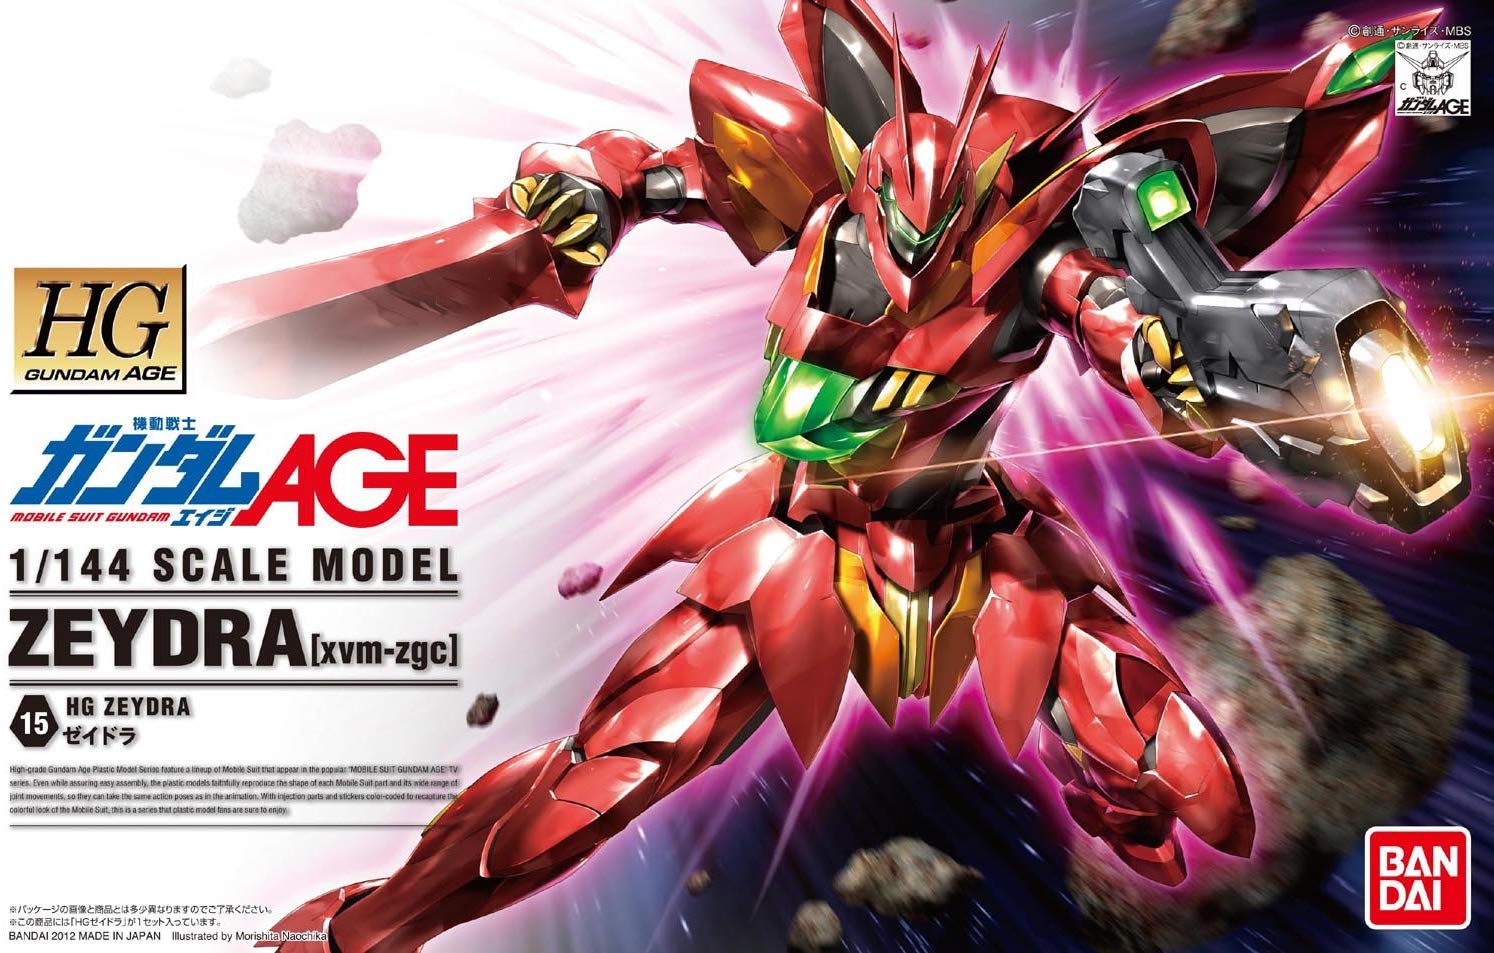 Gundam Age High Grade (HG): #15 Zeydra 